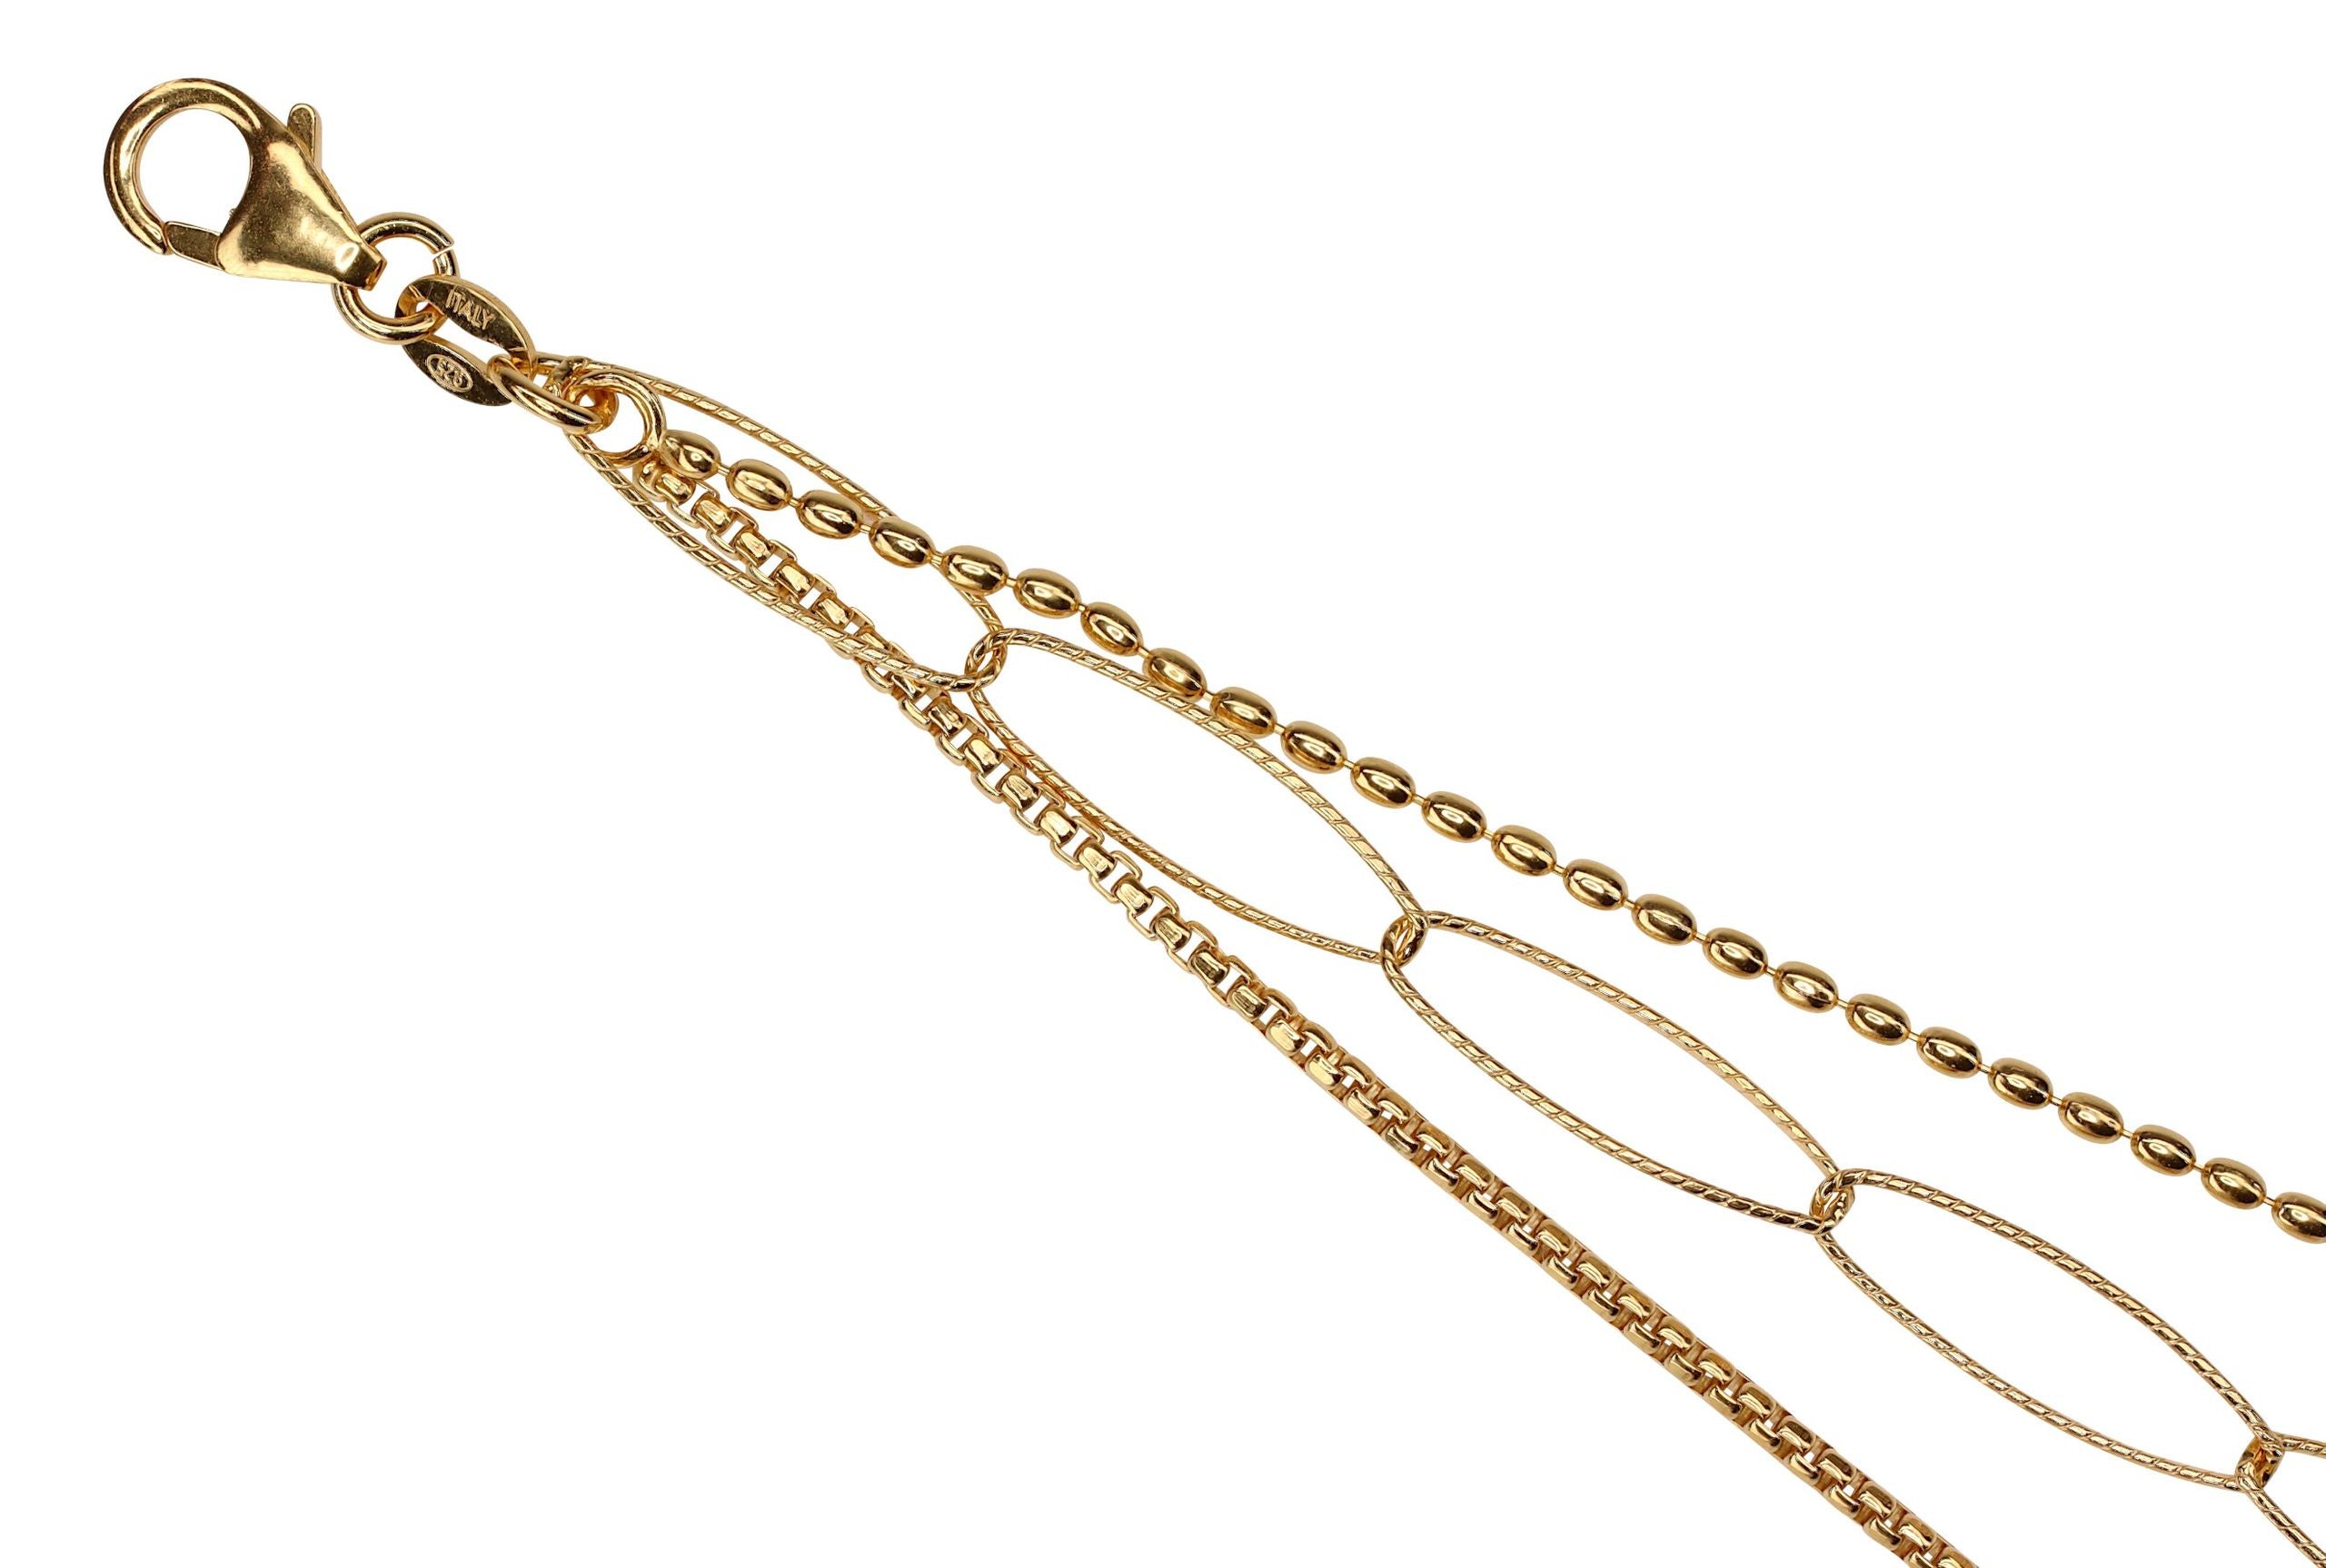 Vergoldetes Multifili-Armband mit ovalen Geflechten